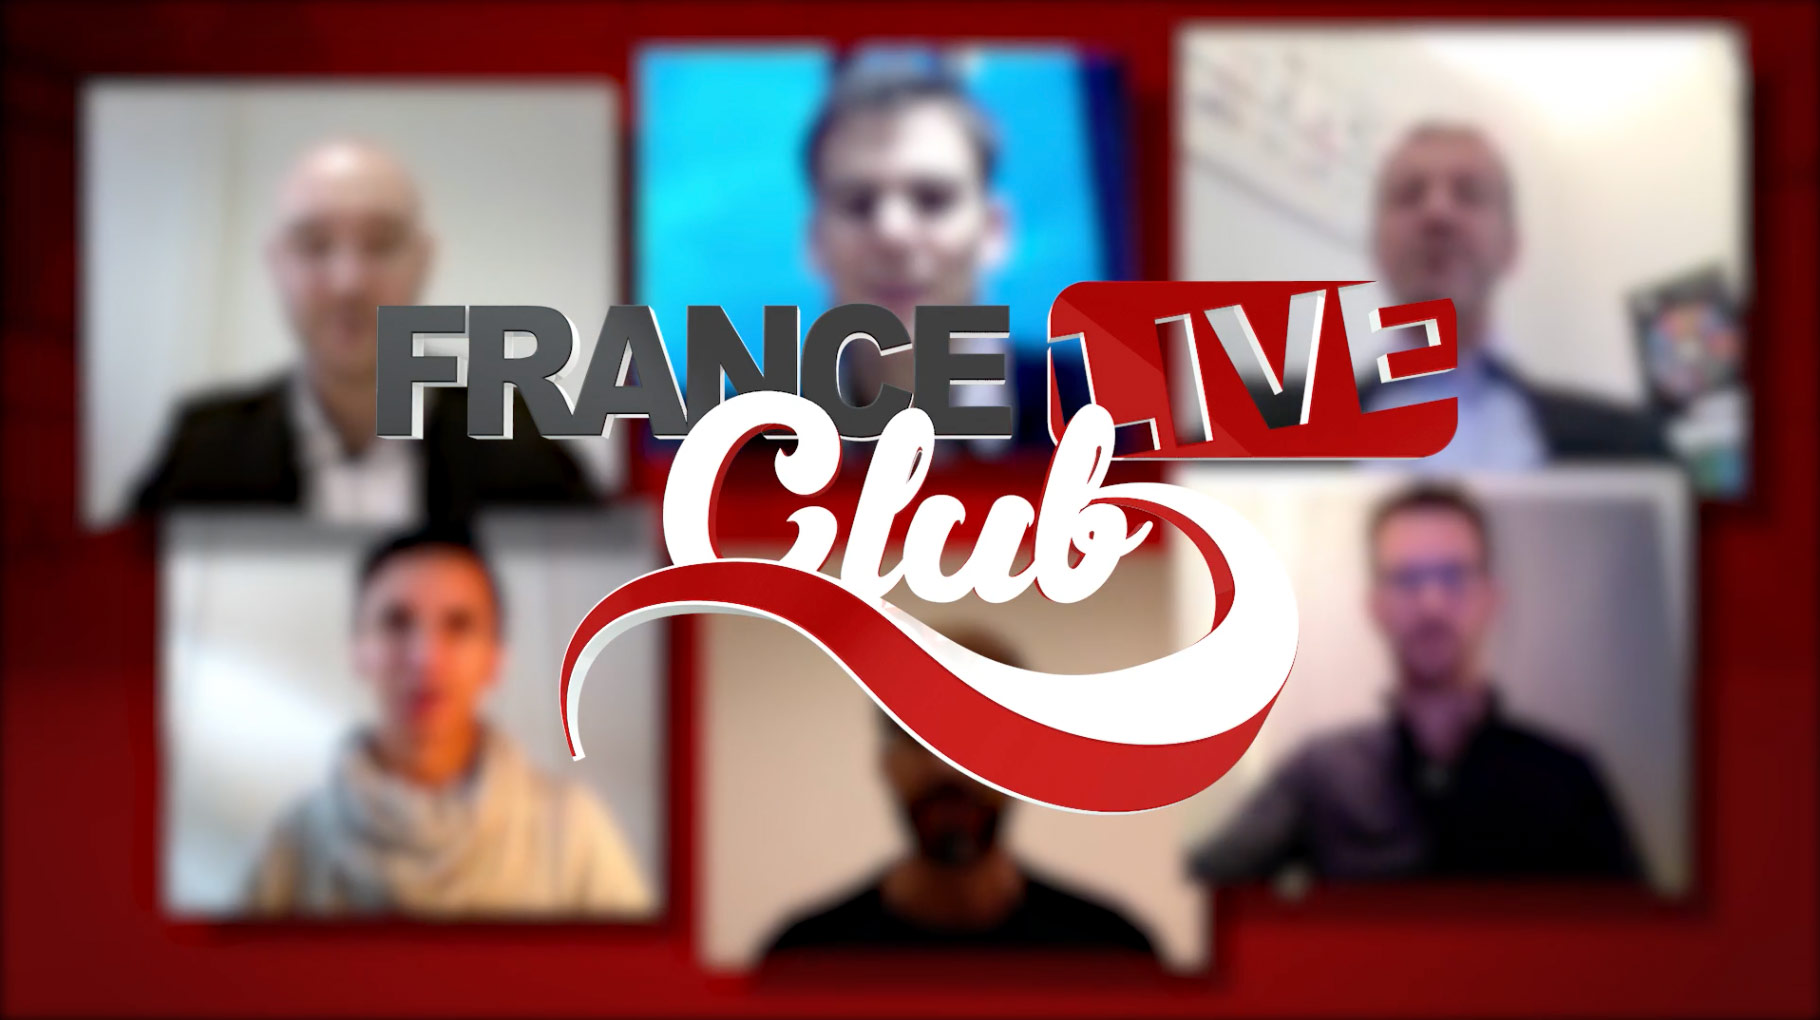 France Live Club